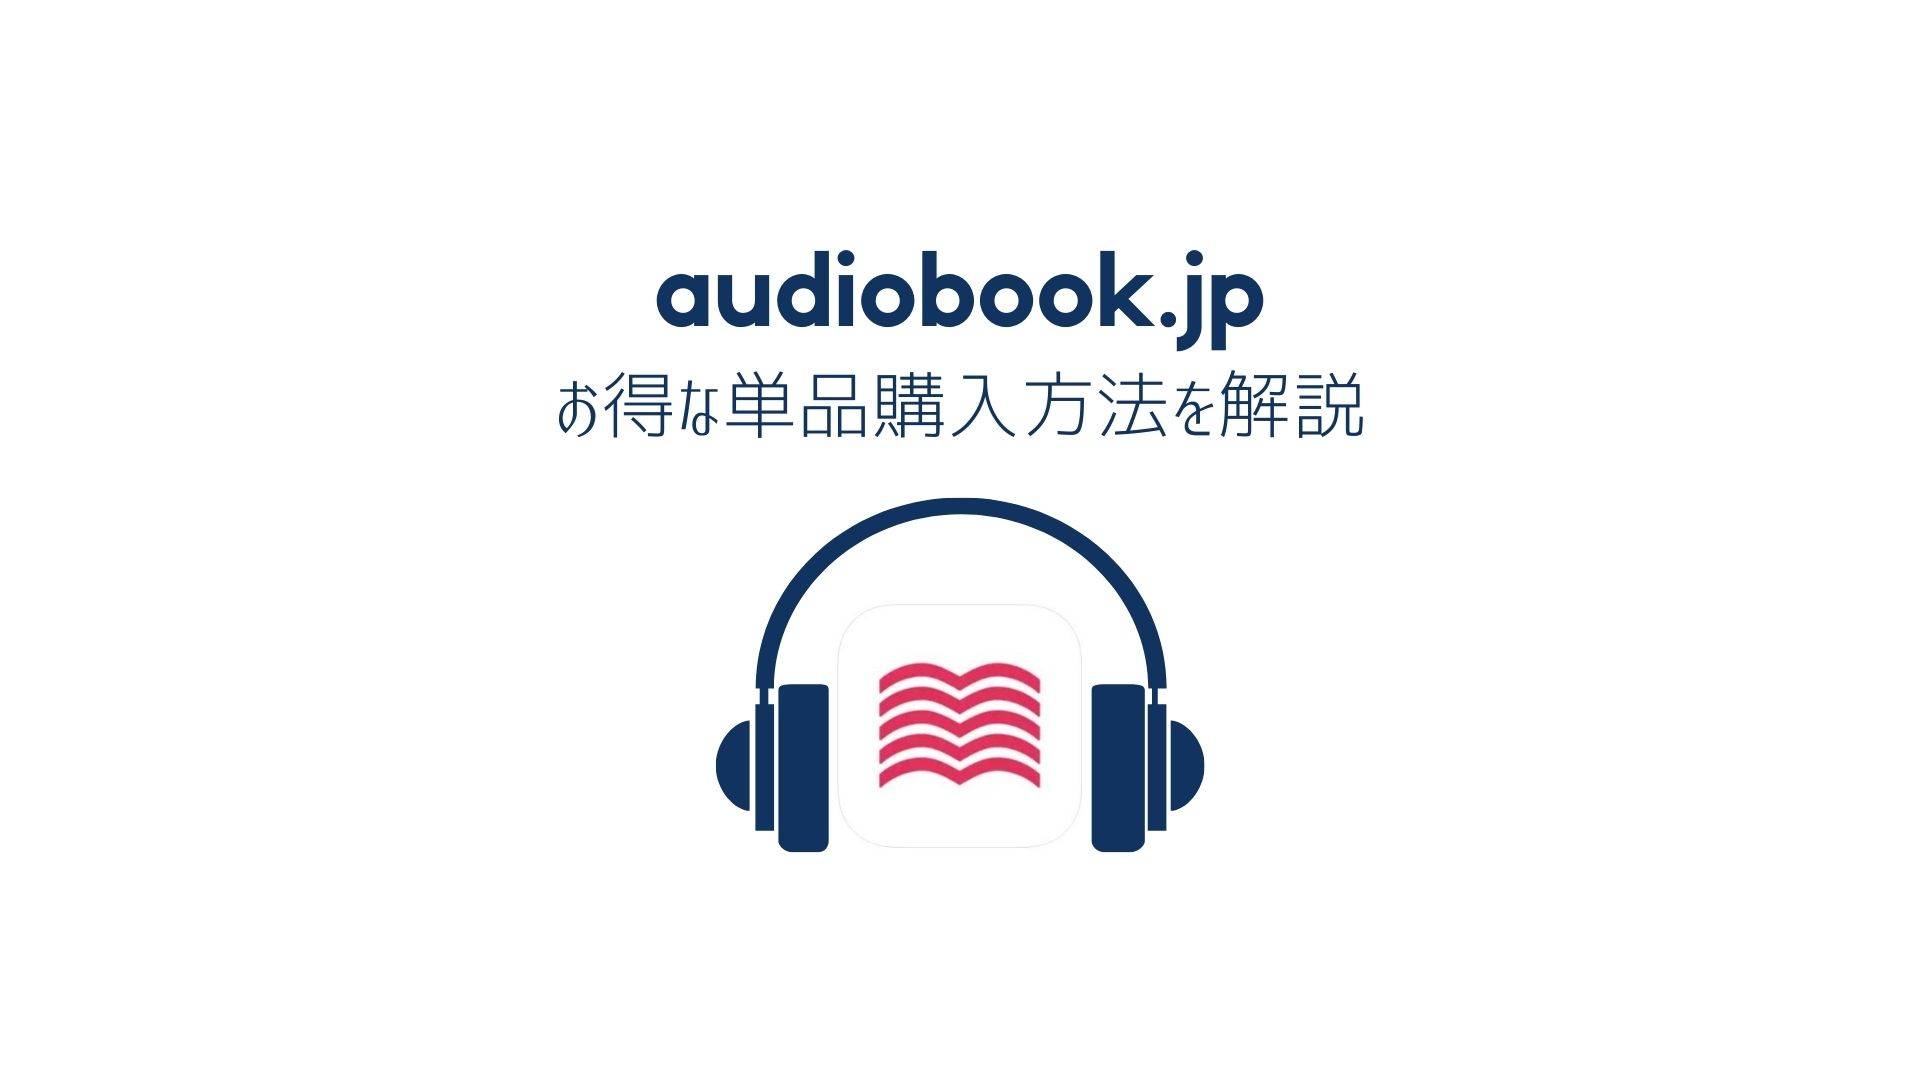 audiobook.jpのコインは高い！単品購入ならWEBからの方が安い